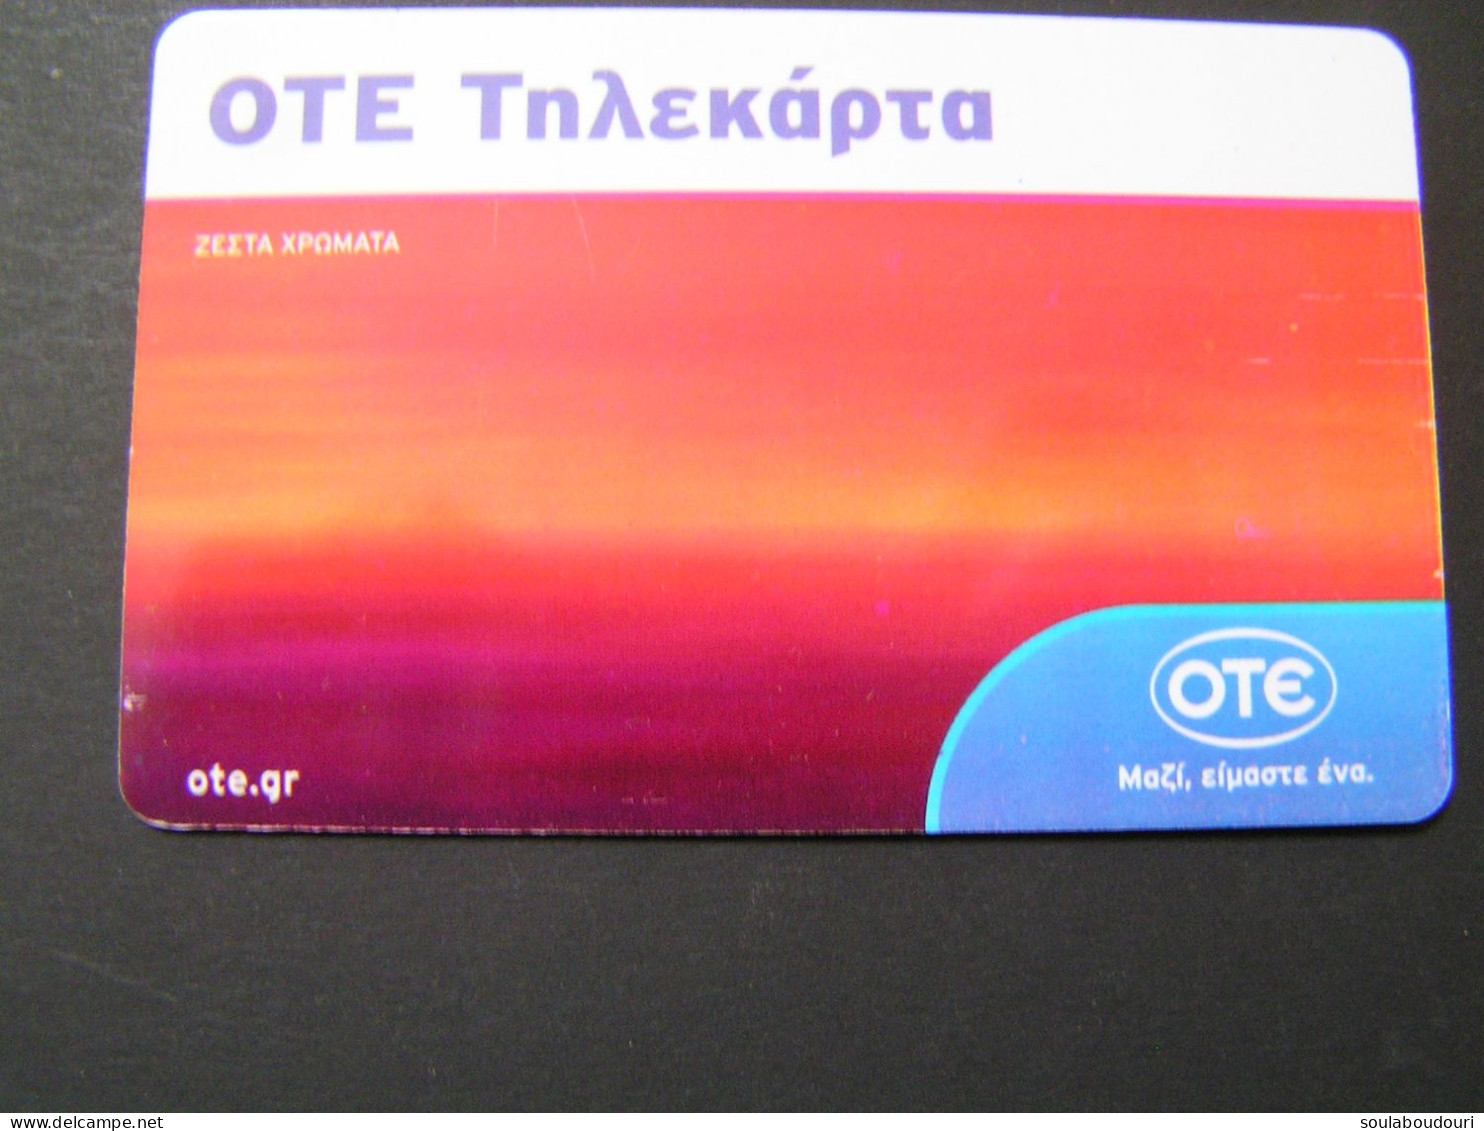 GREECE  Phonecards.. - Grecia